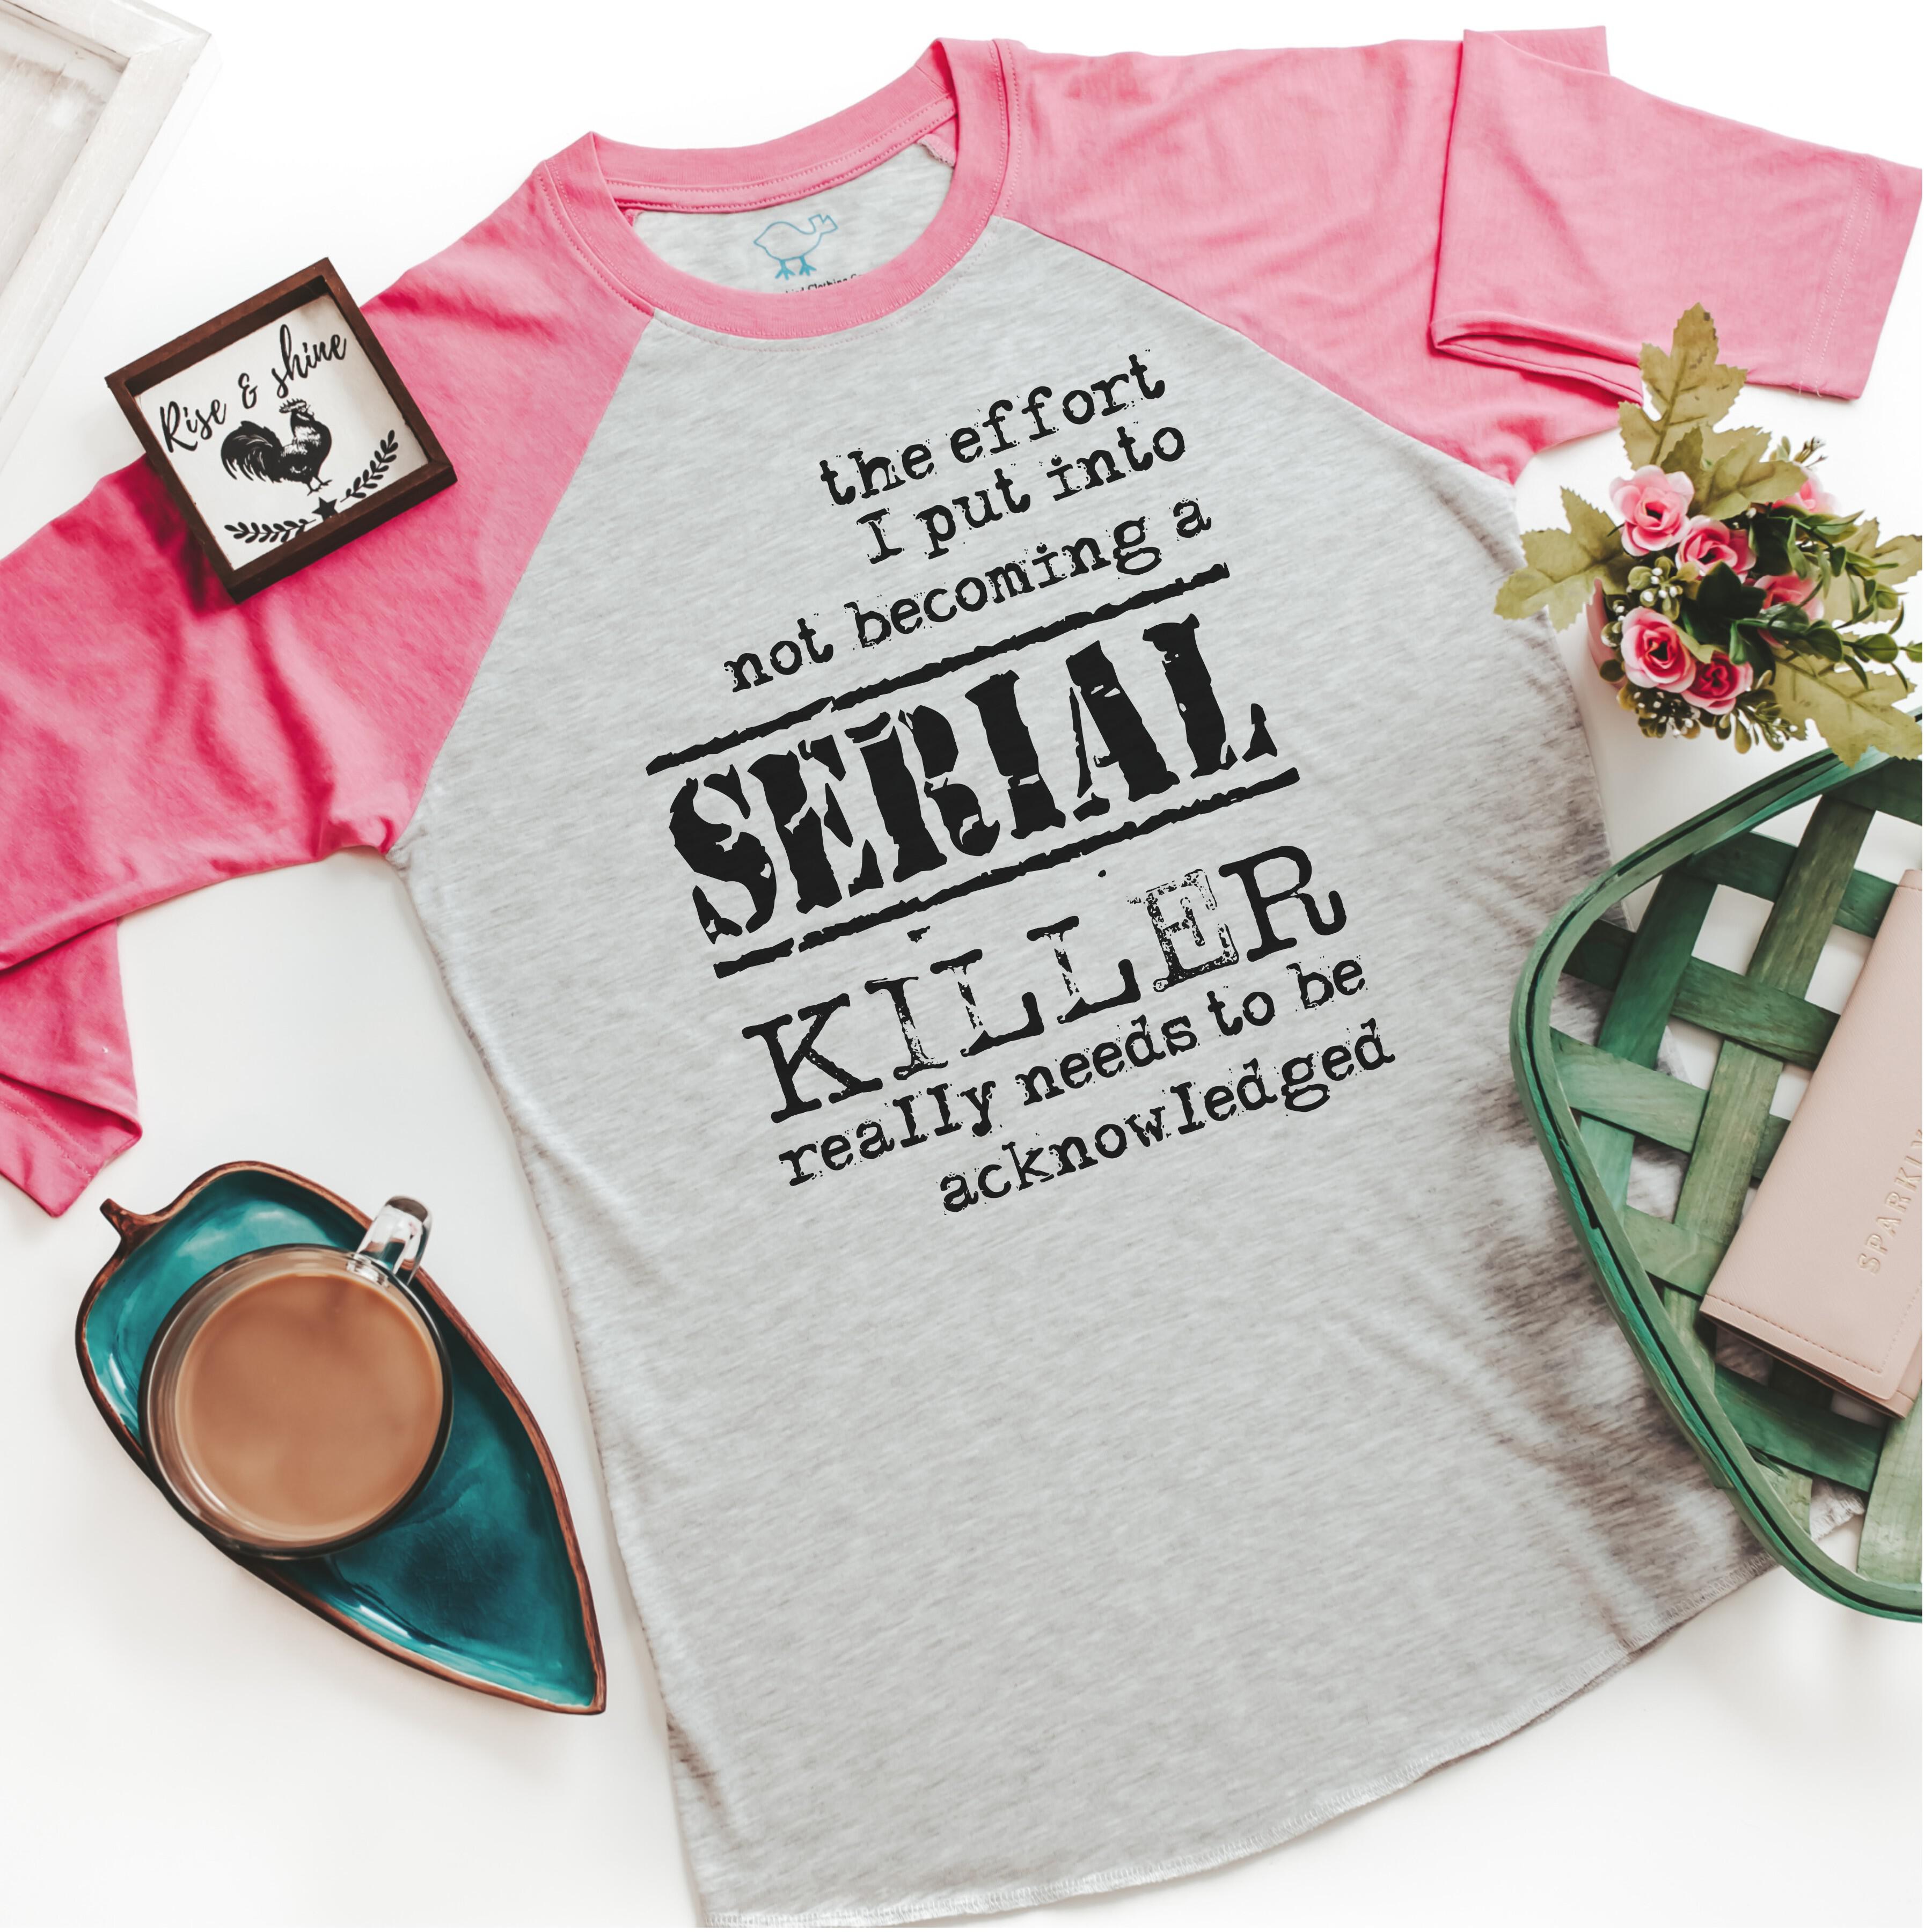 Serial killer shirt